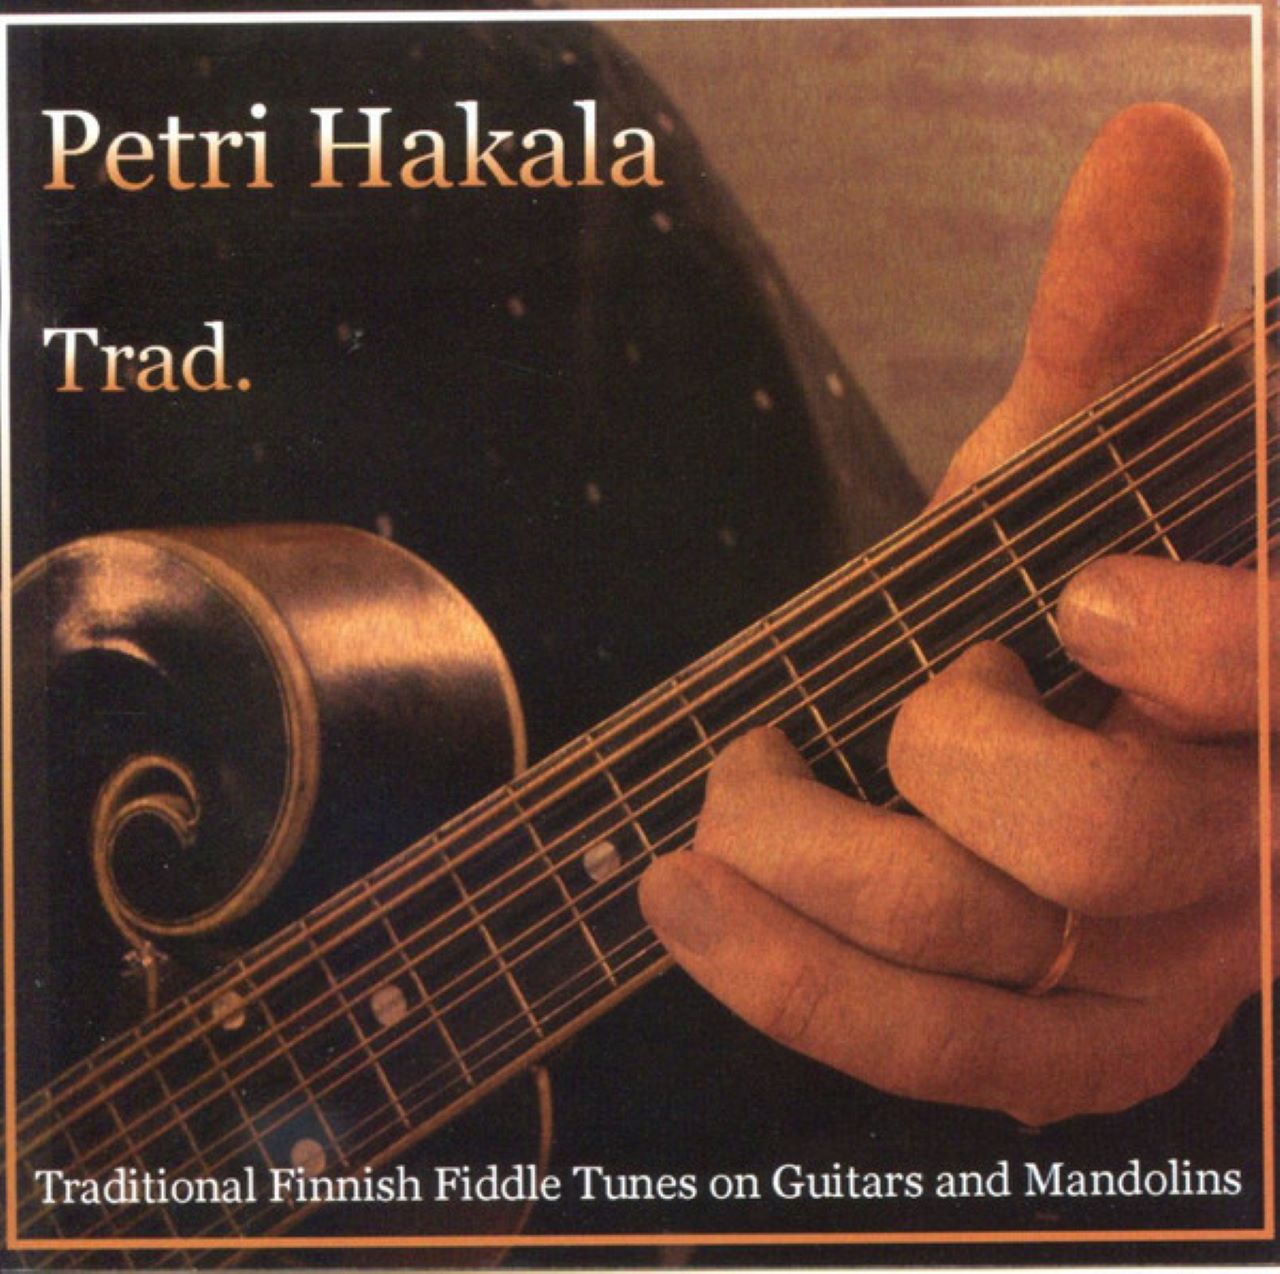 Petri Hakala - Trad cover album